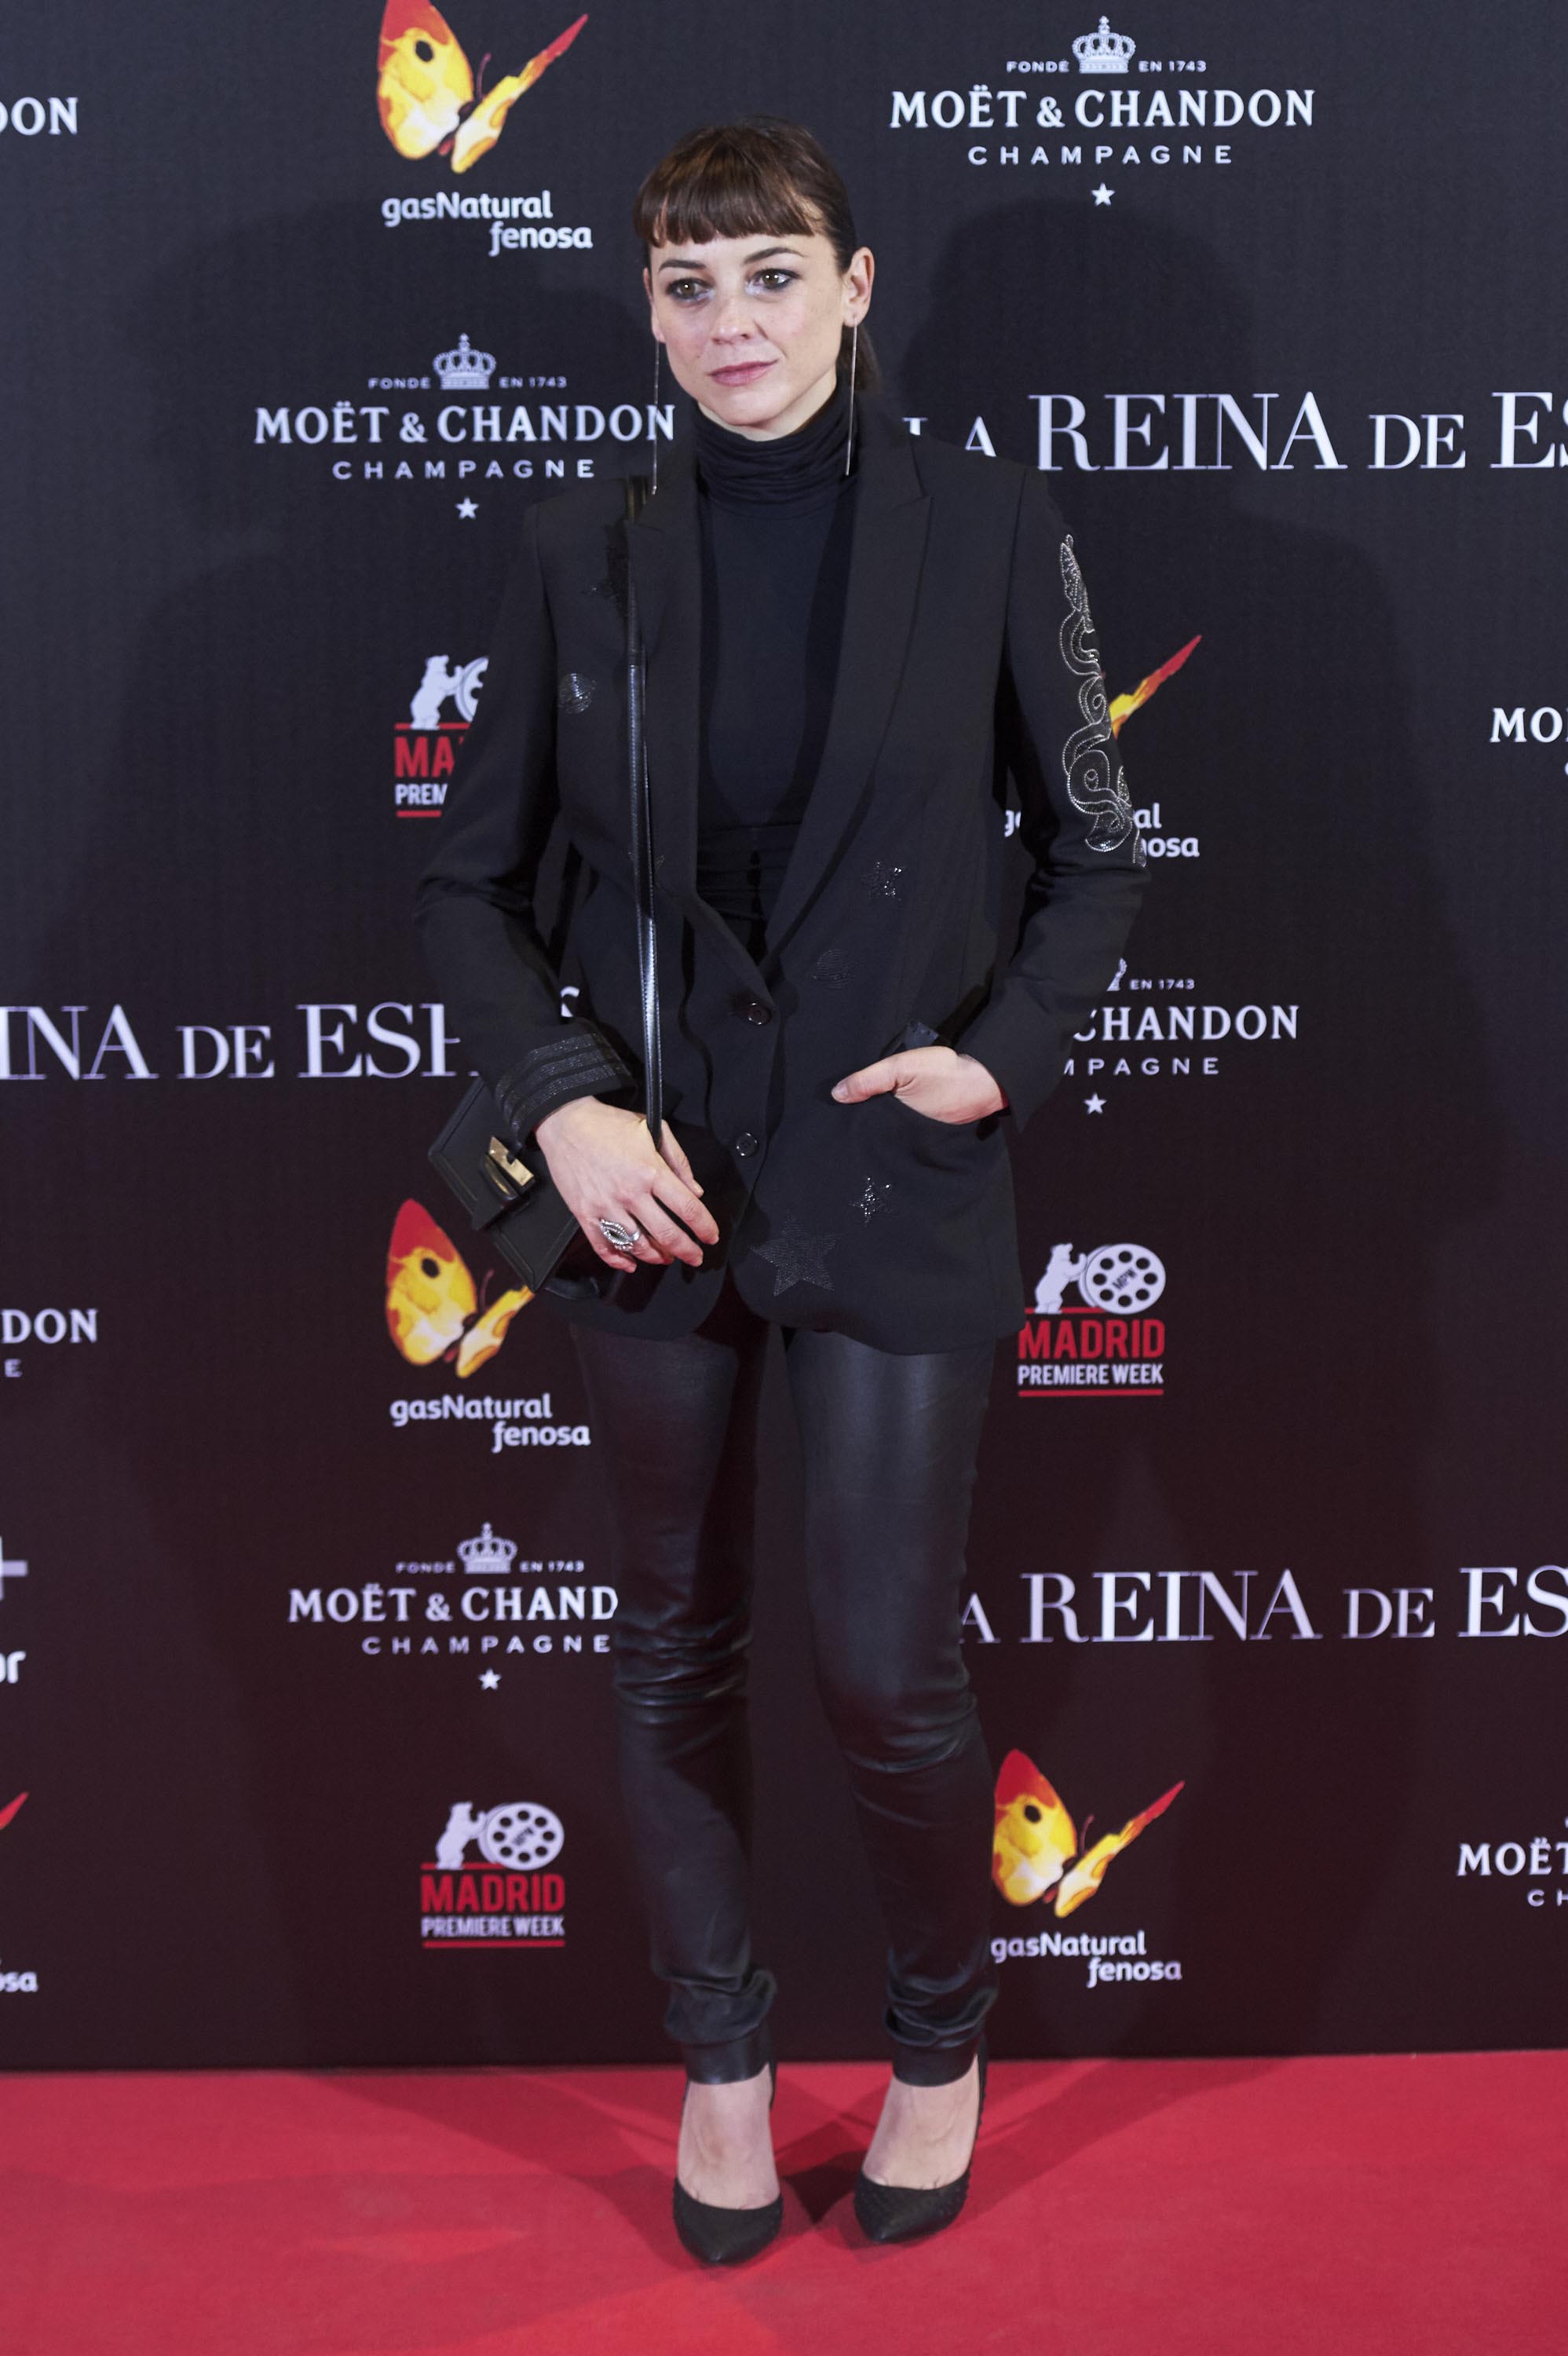 Leonor Watling attends La Reina de Espana premiere